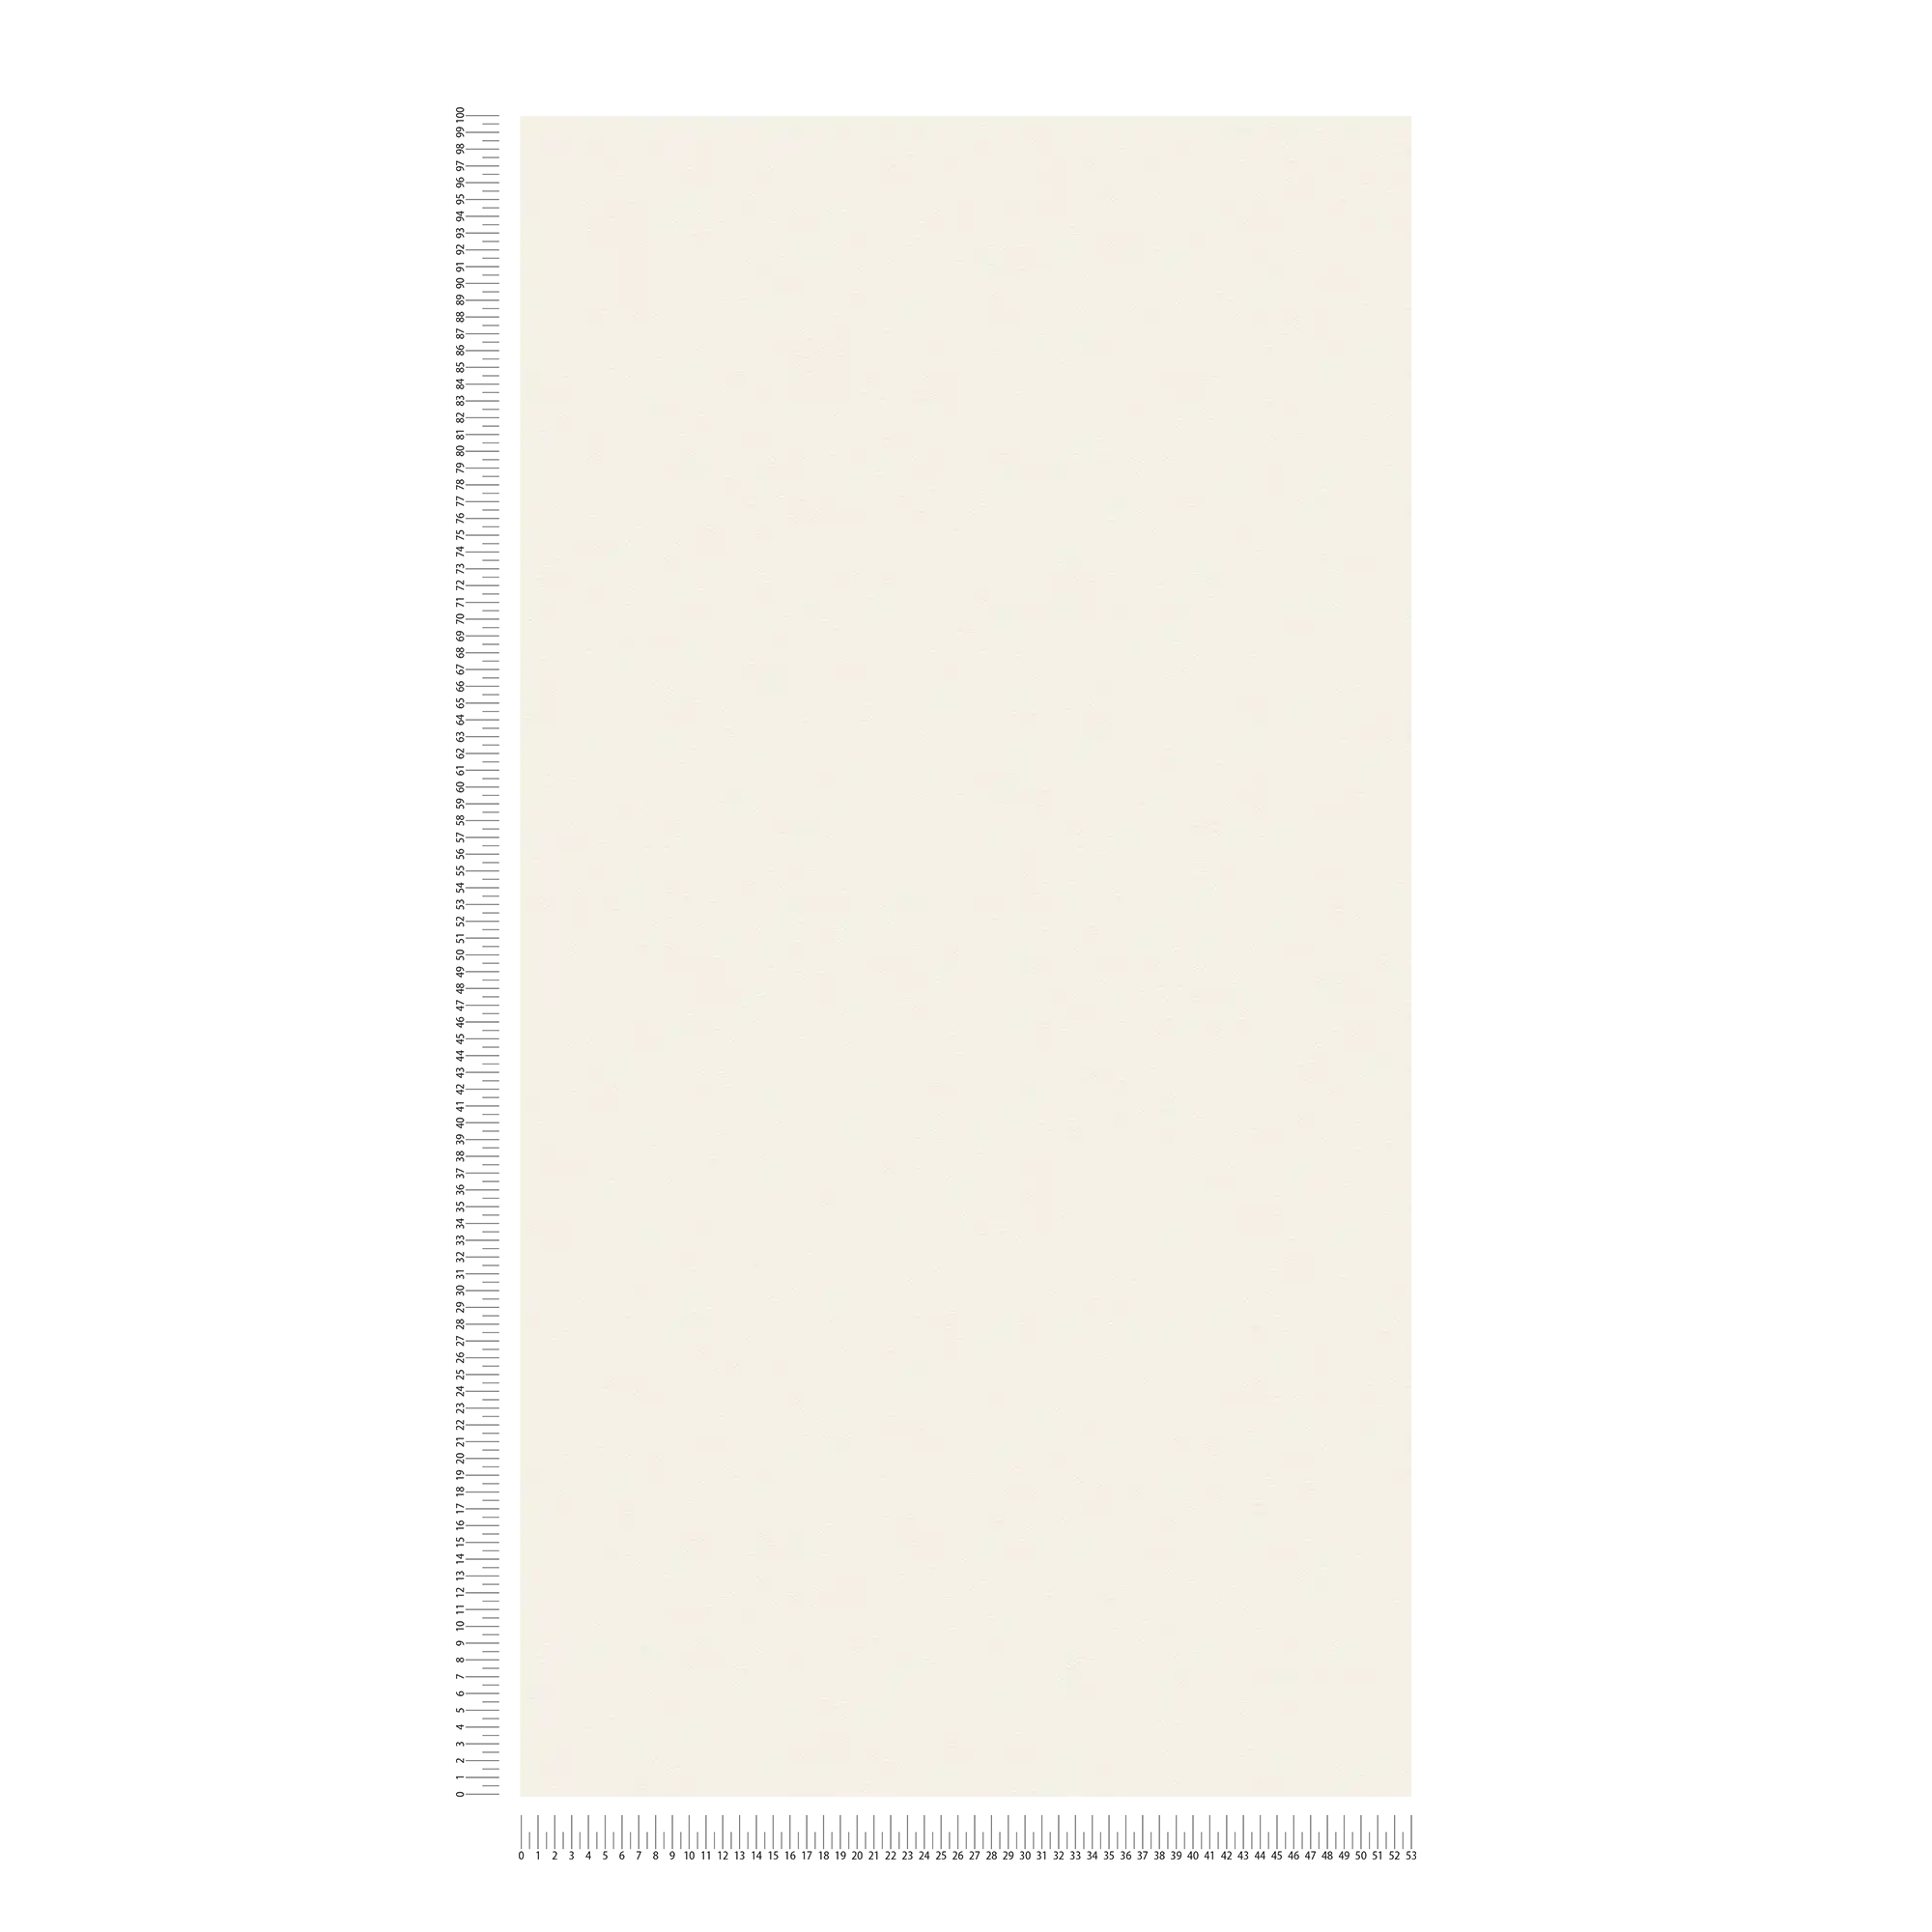             Matte non-woven wallpaper white neutral plain with foam structure
        